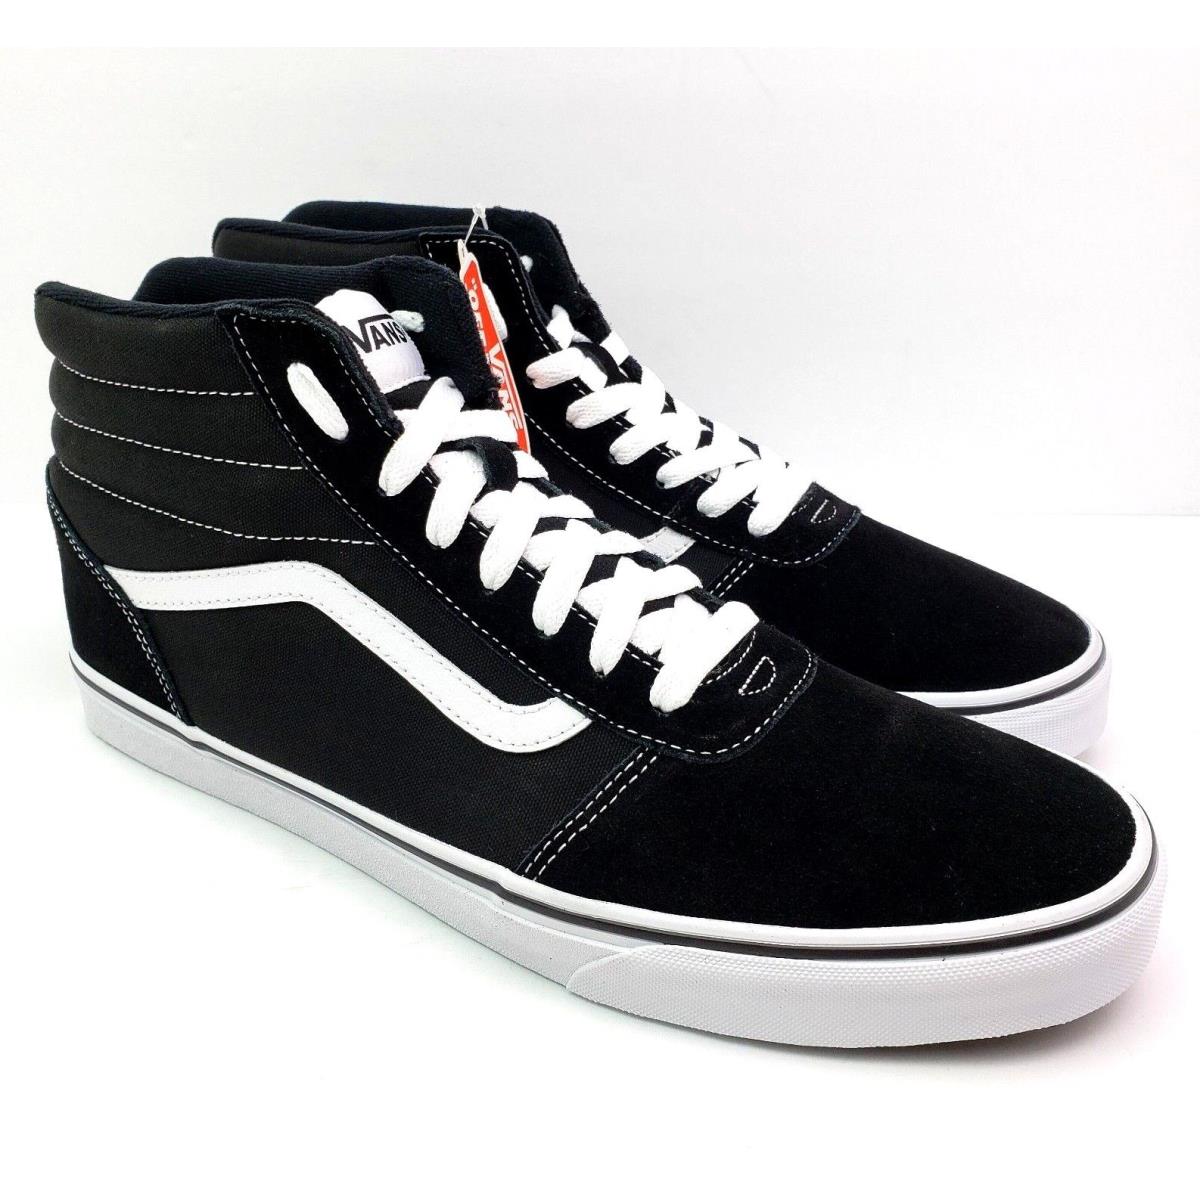 Vans Ward Hi Mens Size 14 Black White Suede Canvas Skate Sneaker Shoes